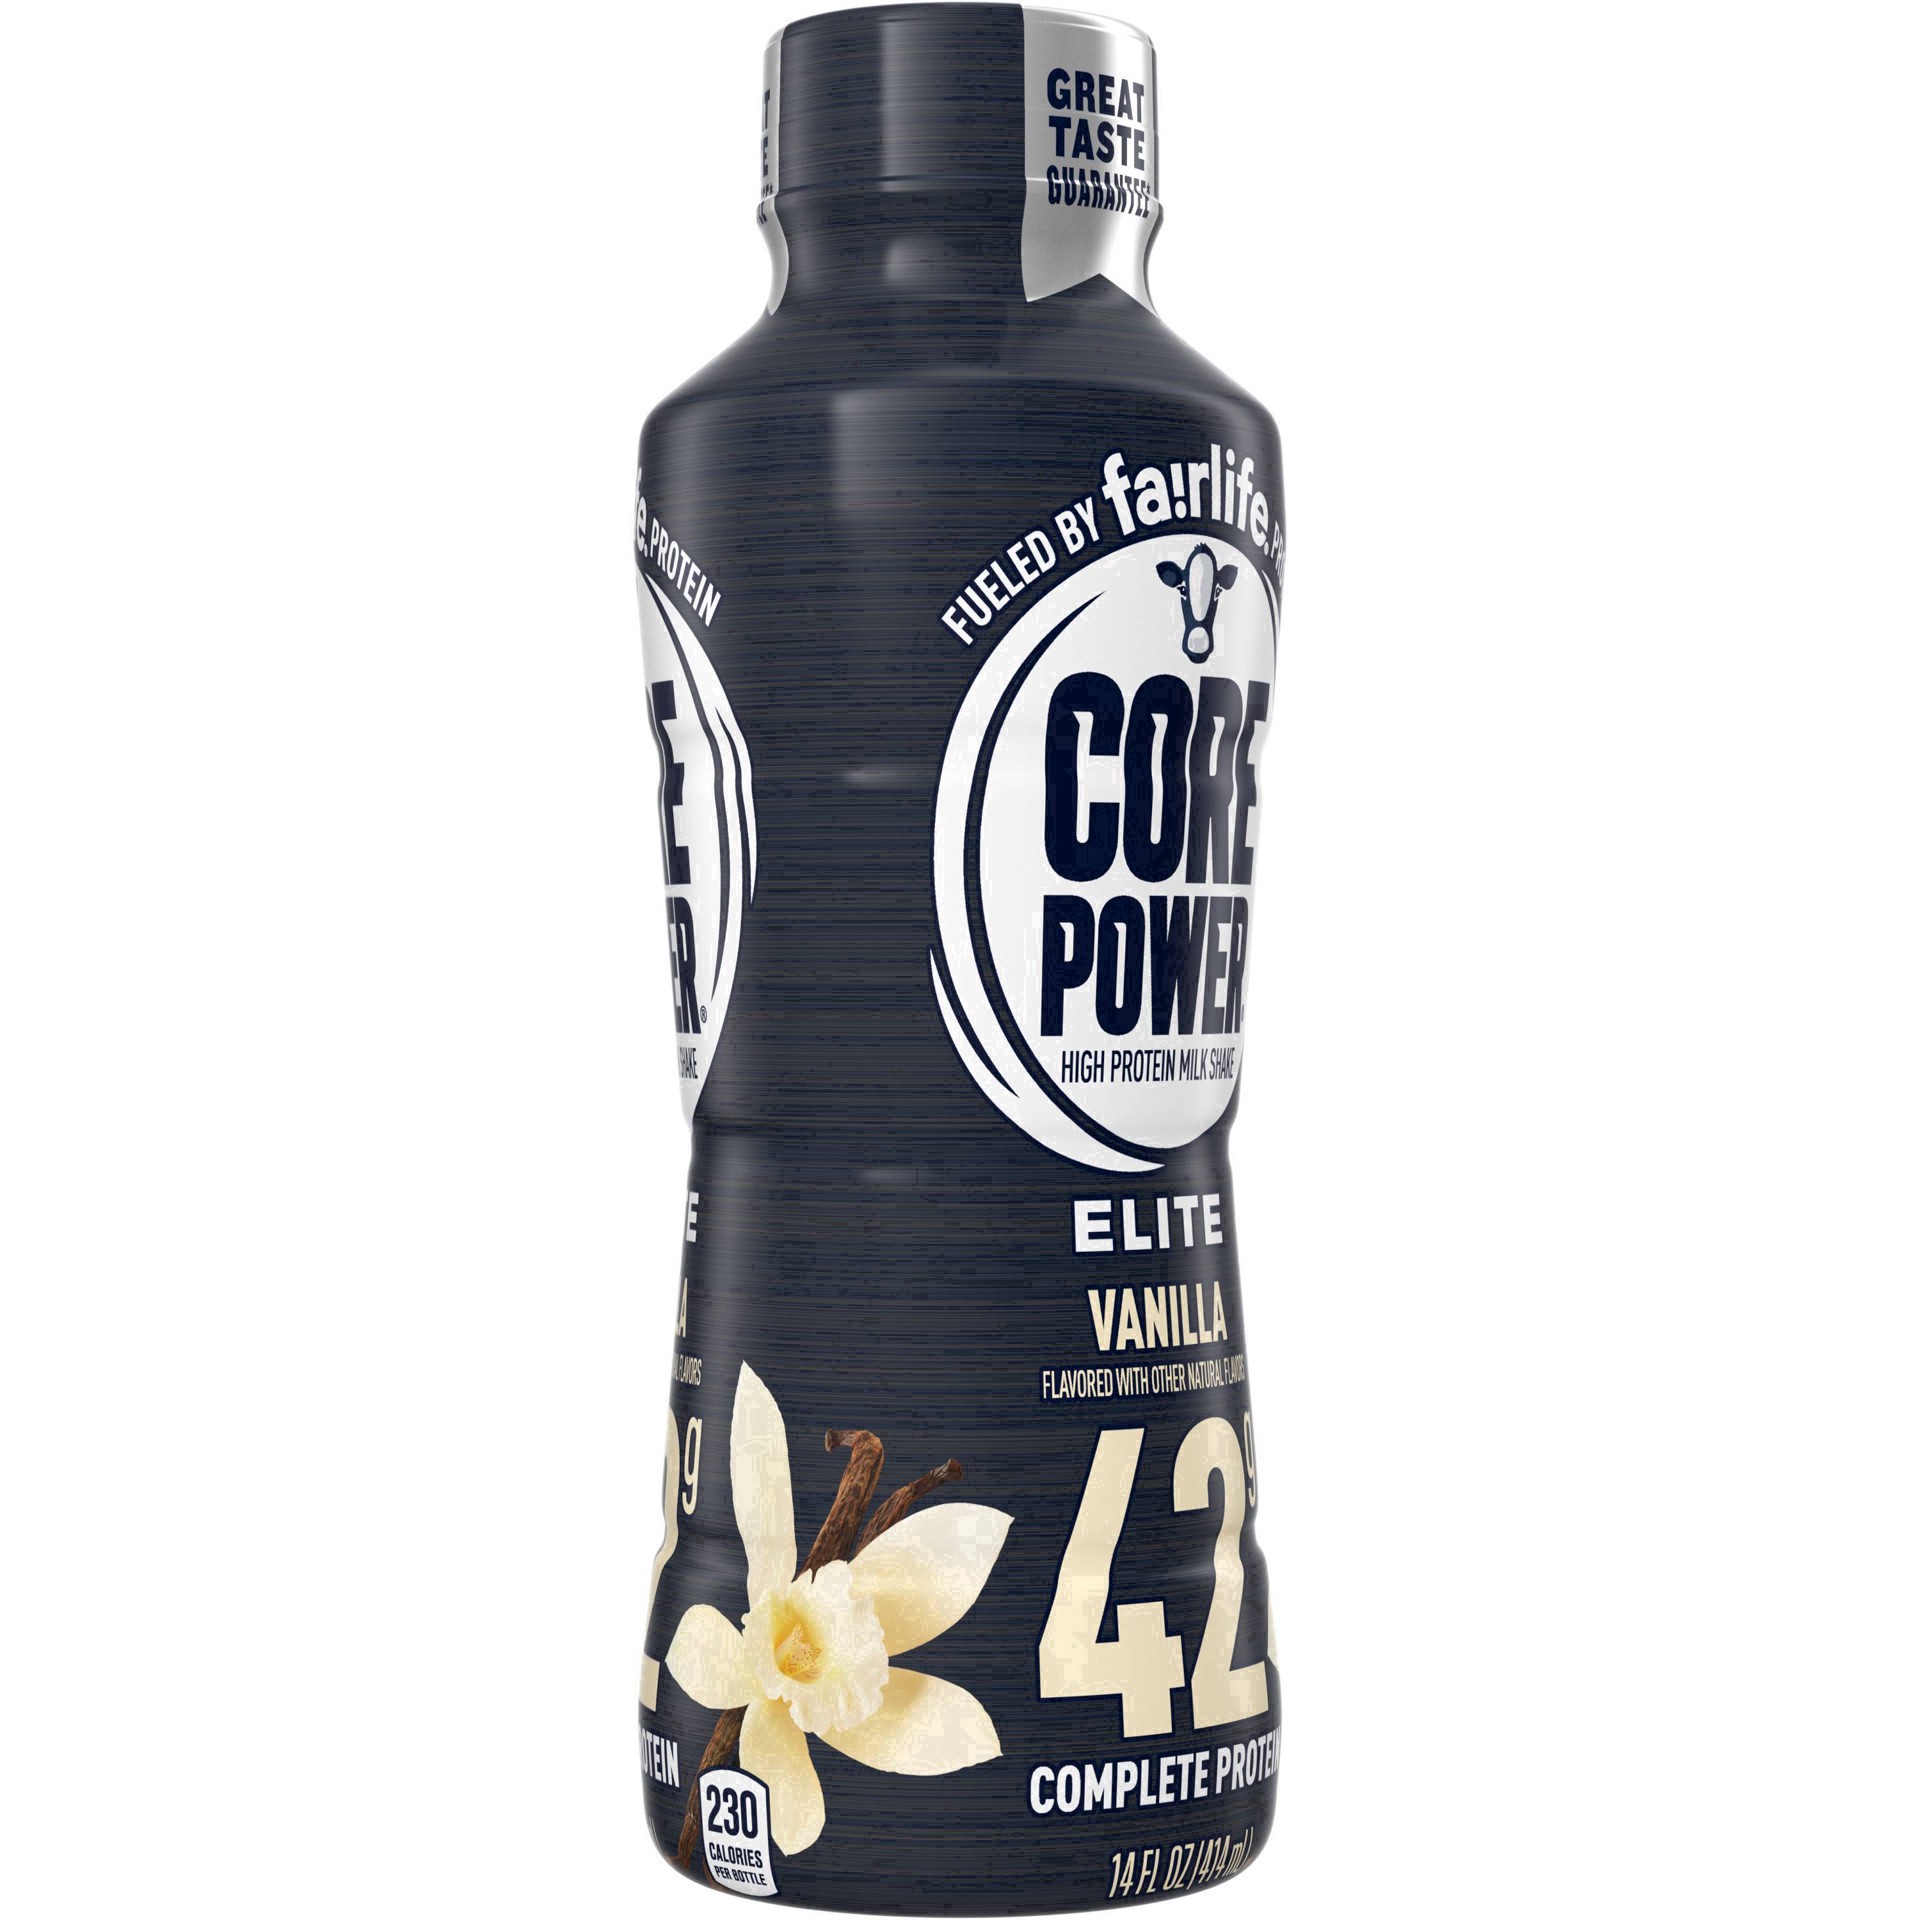 slide 11 of 78, Core Power High Protein Elite Vanilla Milk Shake 14 fl oz, 14 fl oz